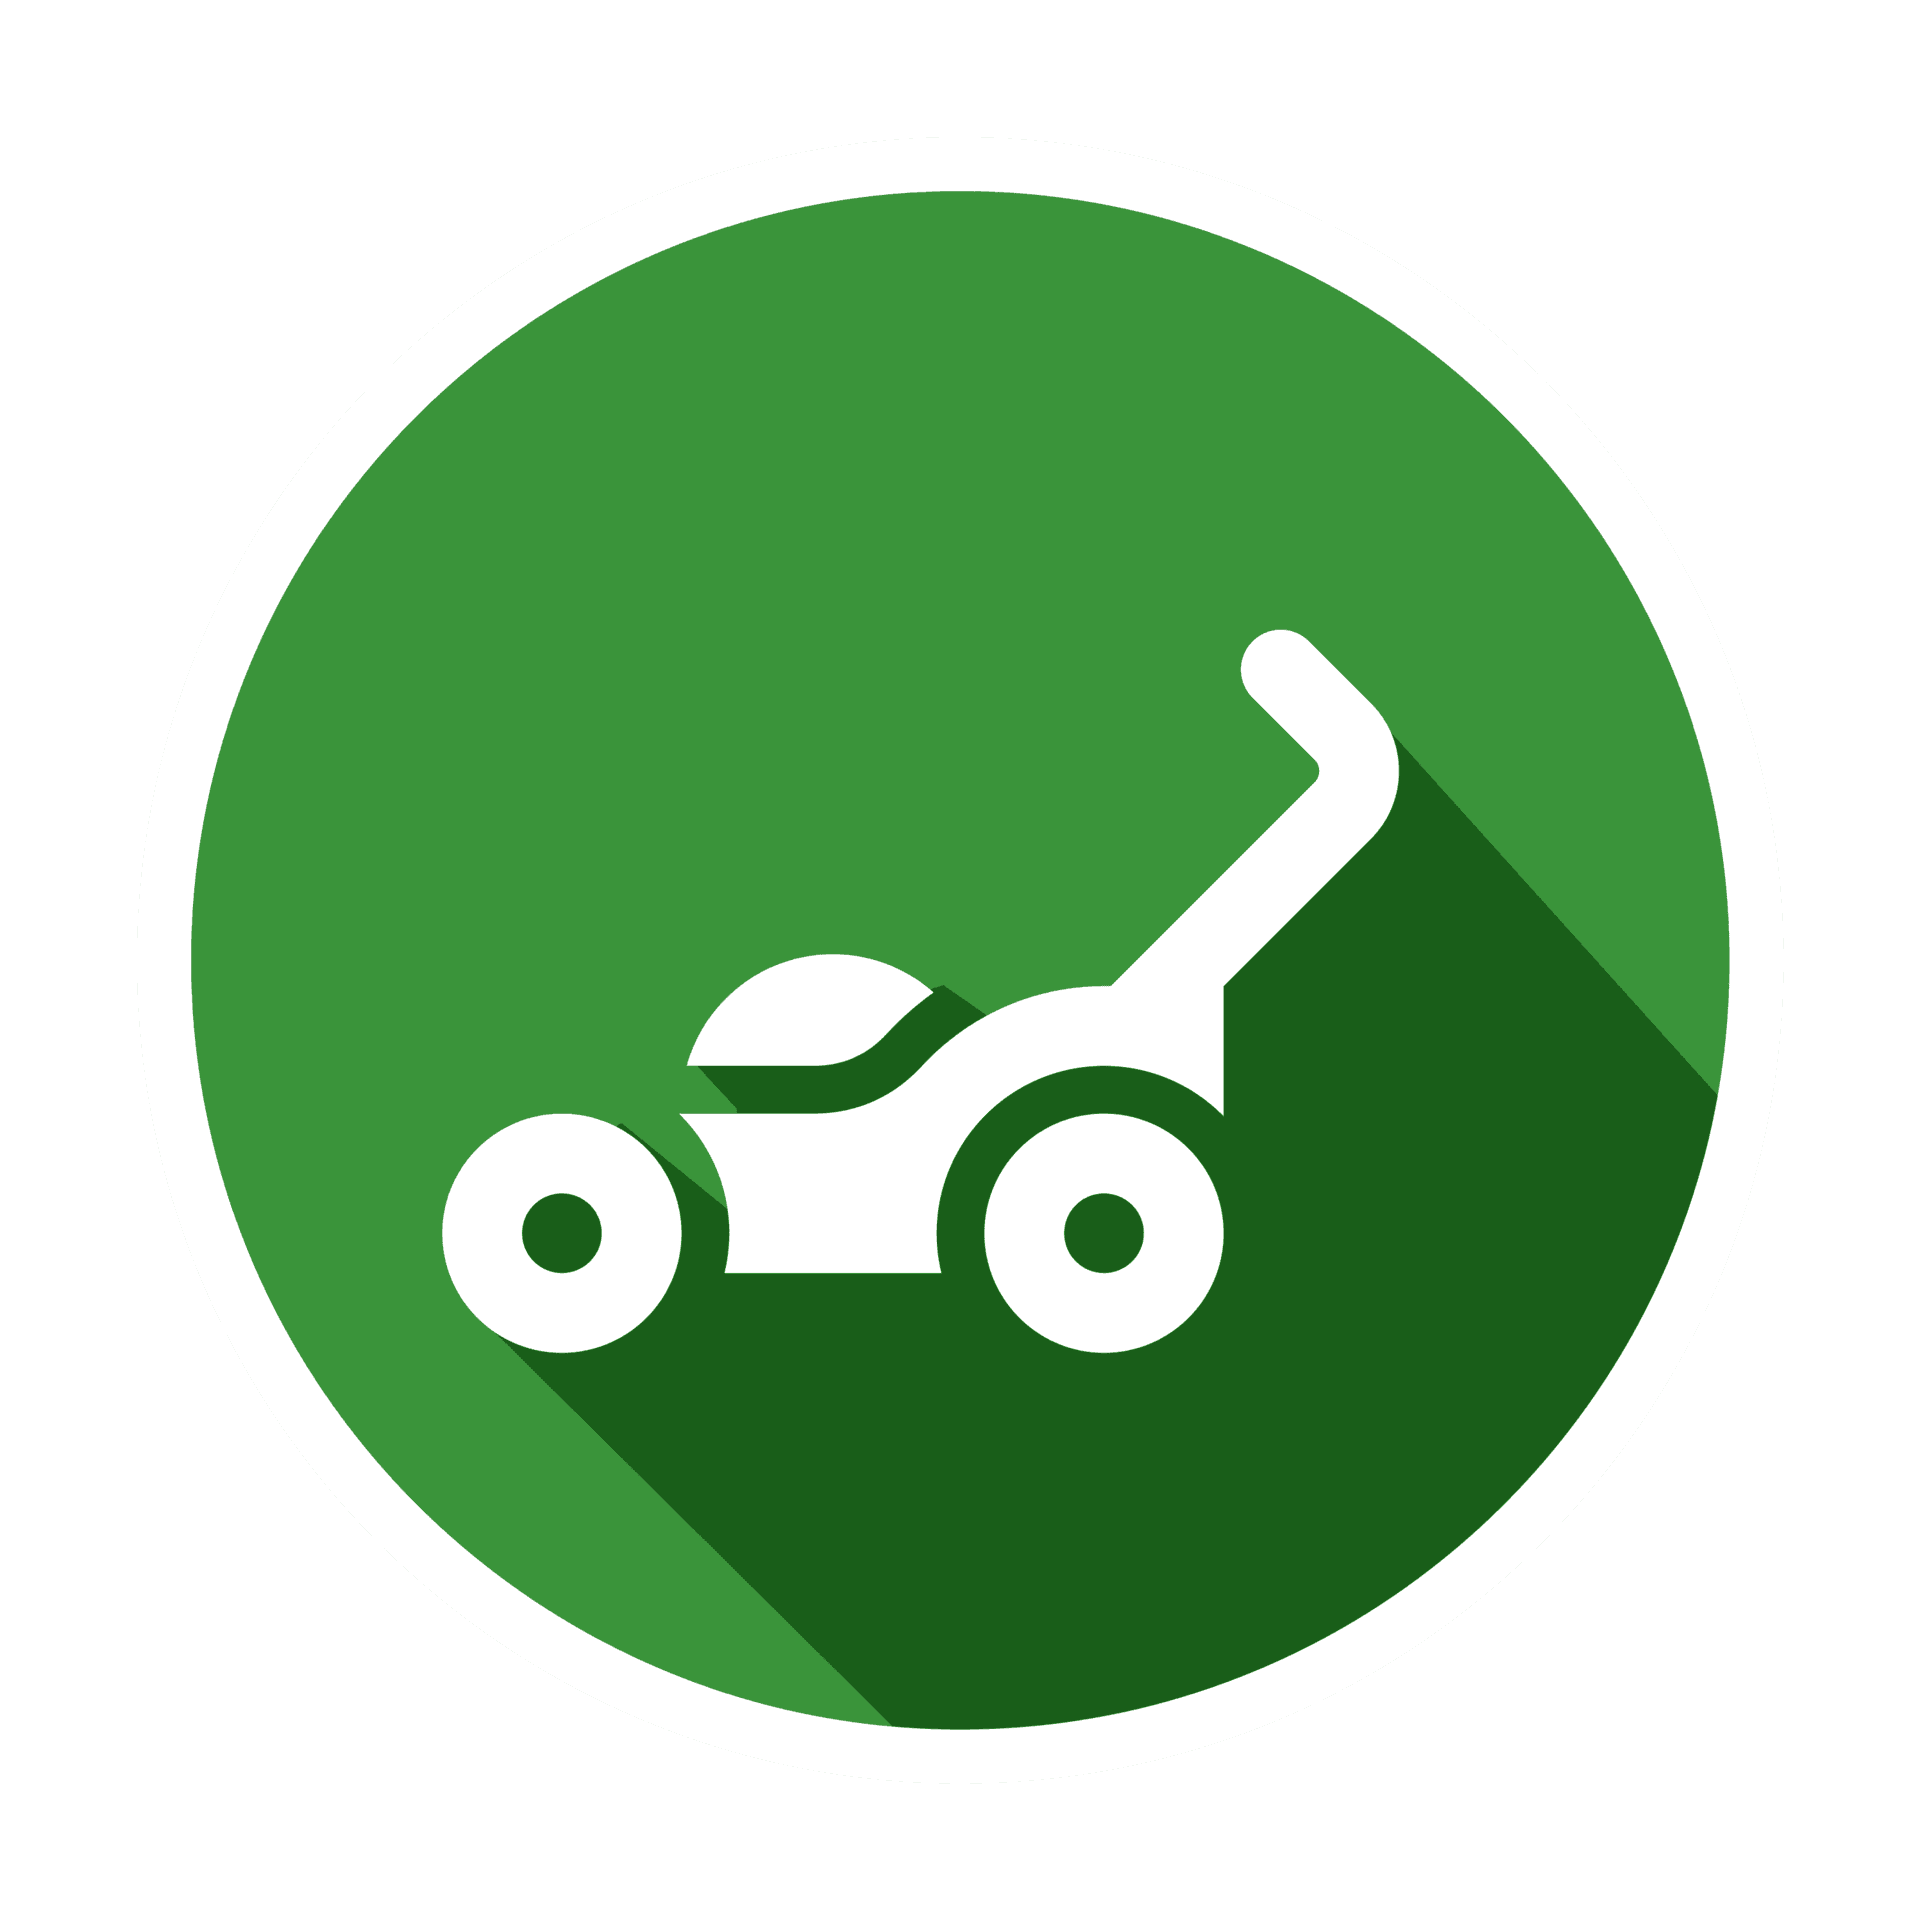 Mowing symbol